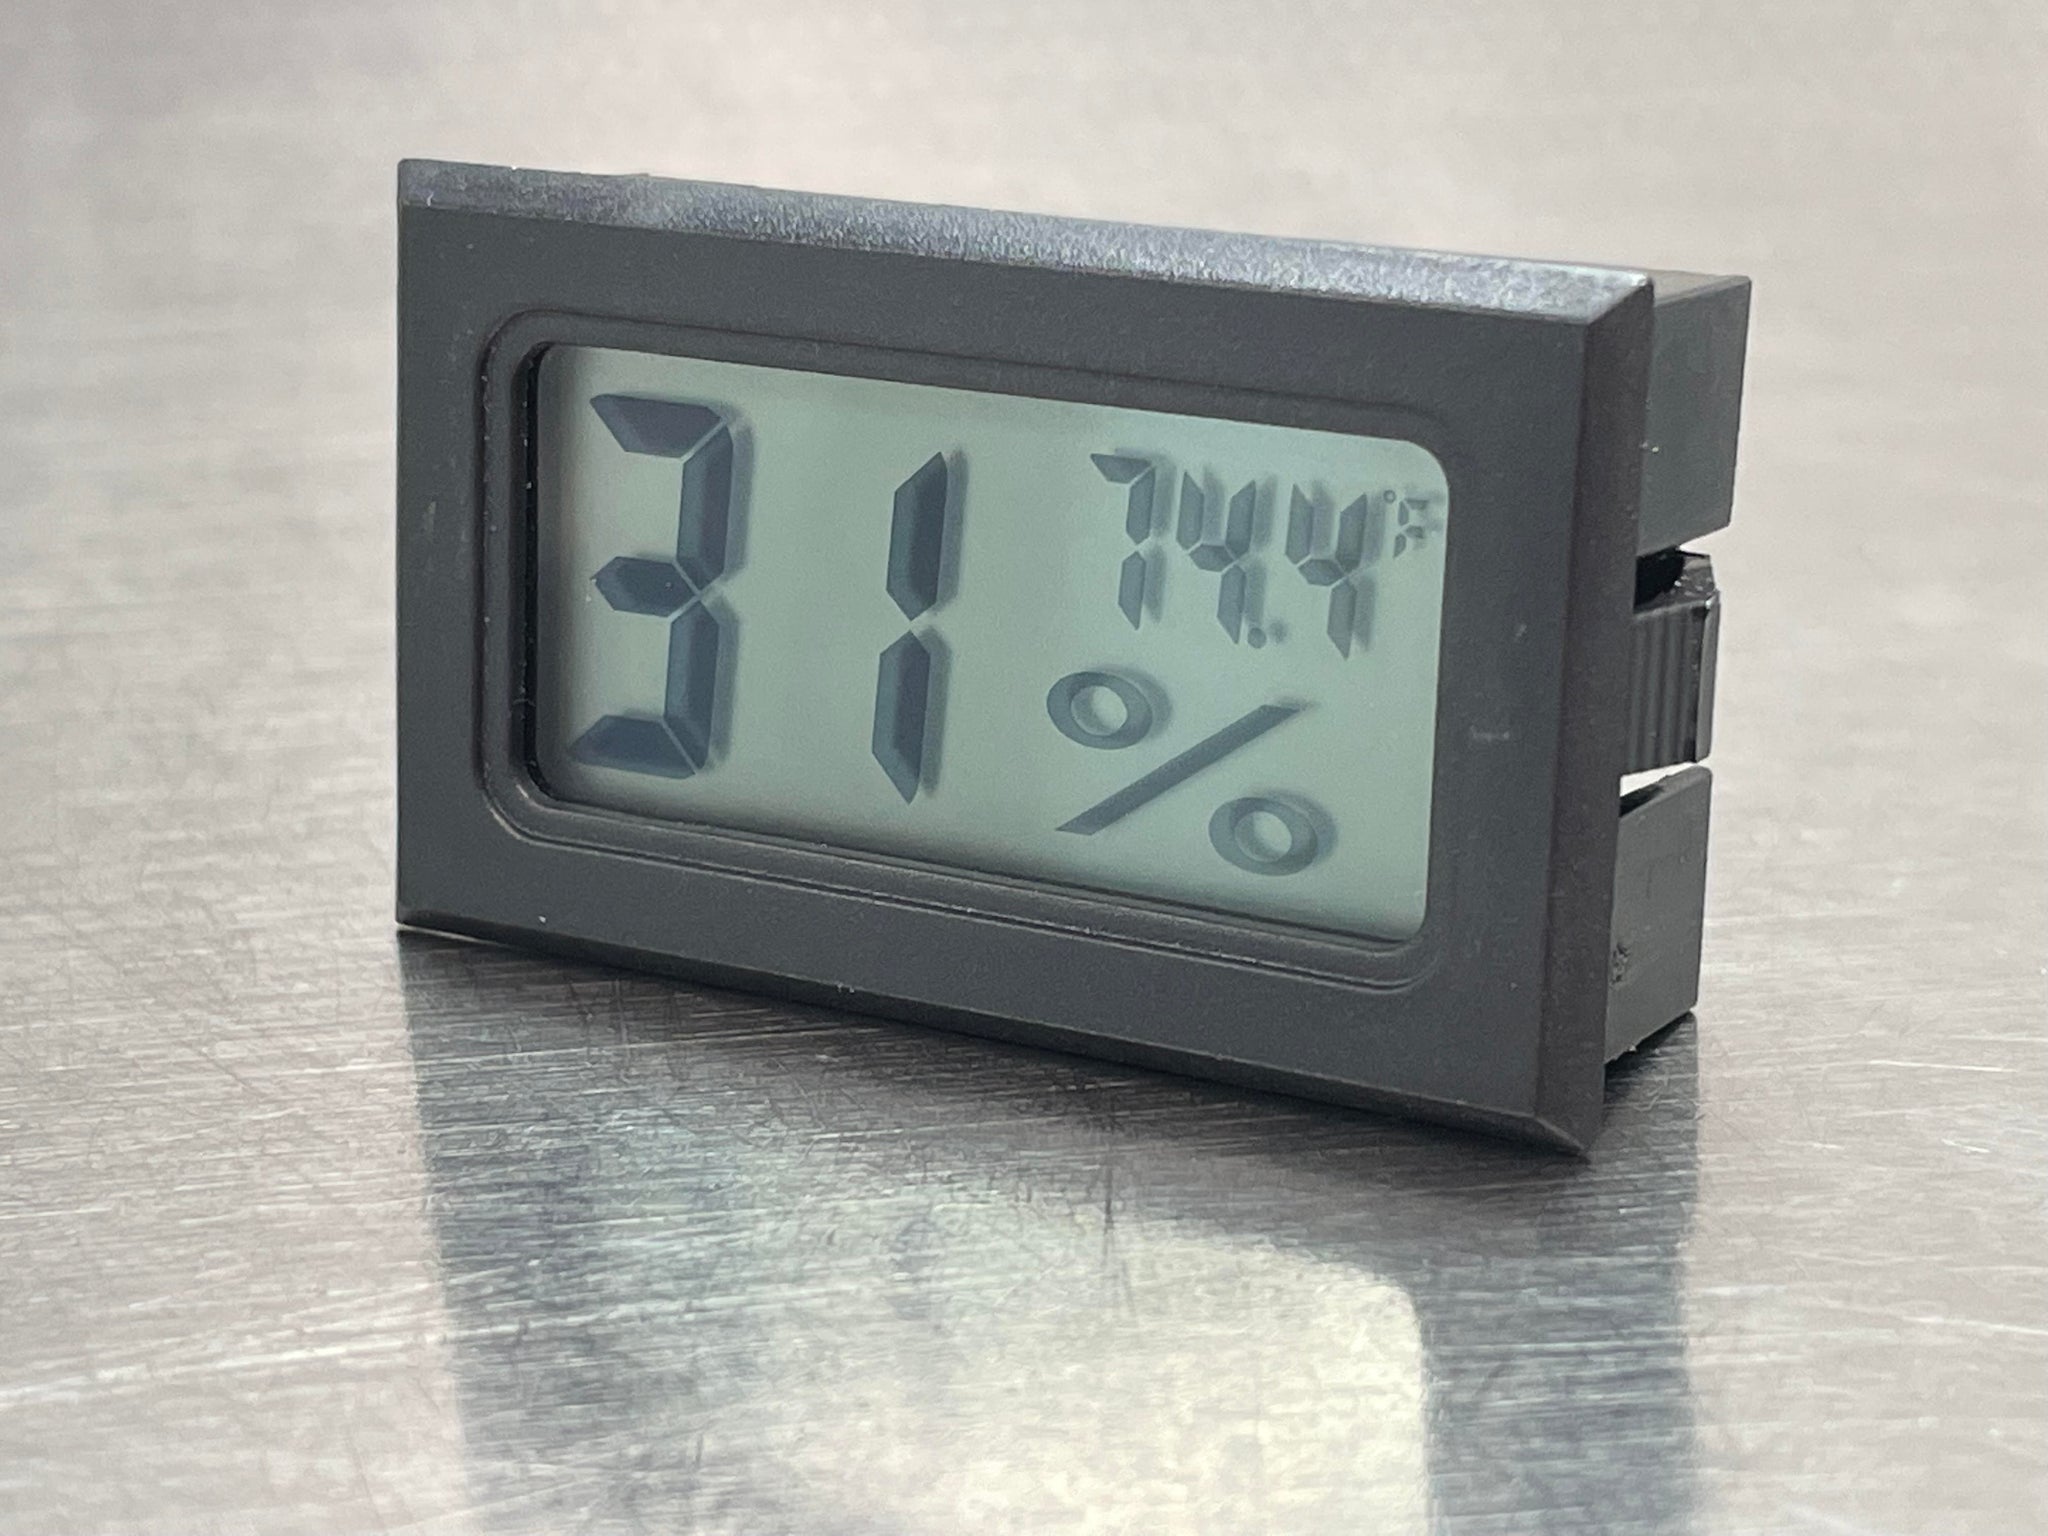 Digital RH Temperature Hygrometer